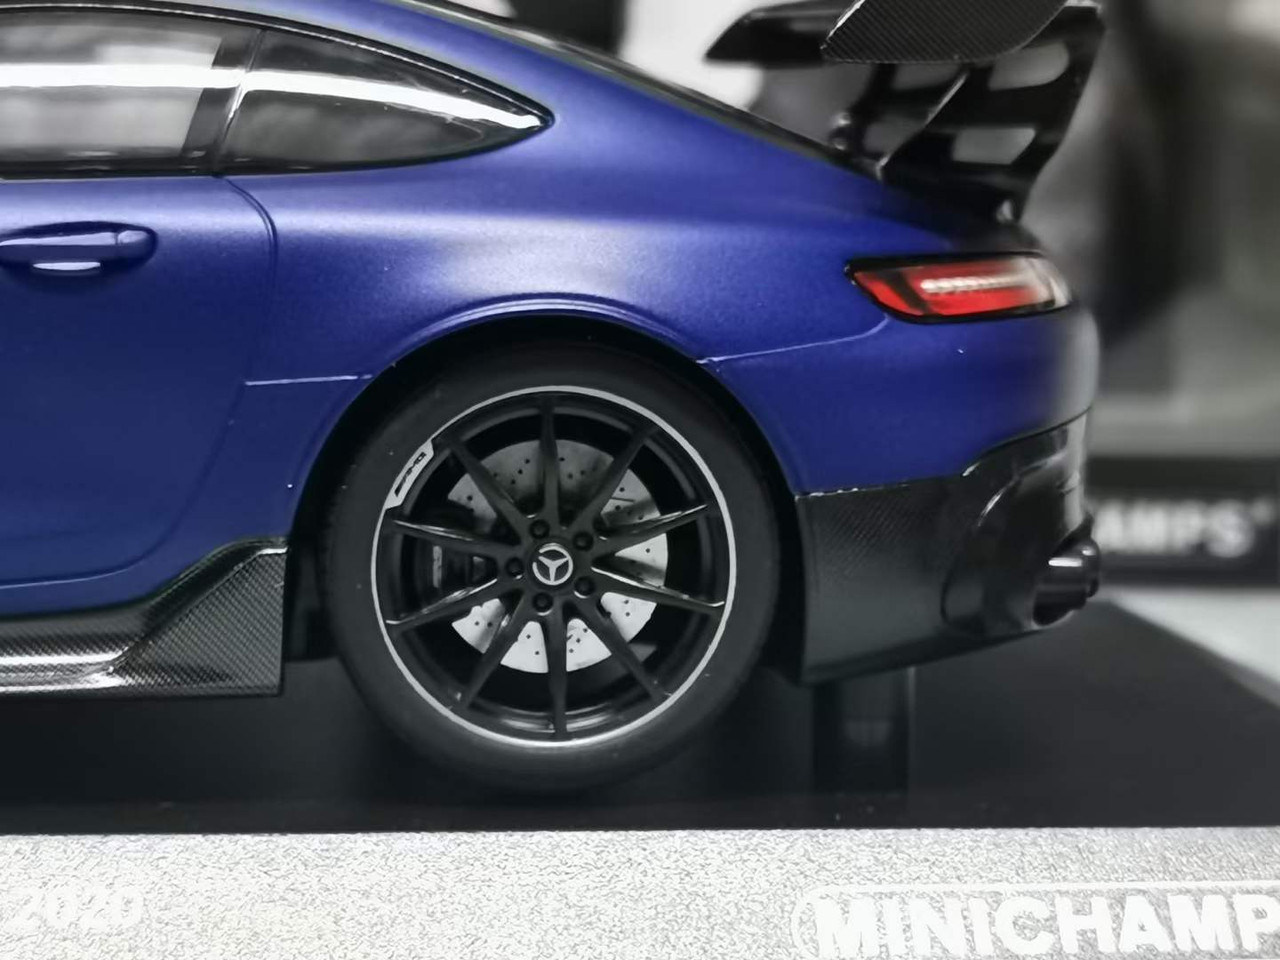 1/18 Minichamps 2020 Mercedes-Benz AMG GT Black Series (Matte Blue) Diecast Car Model